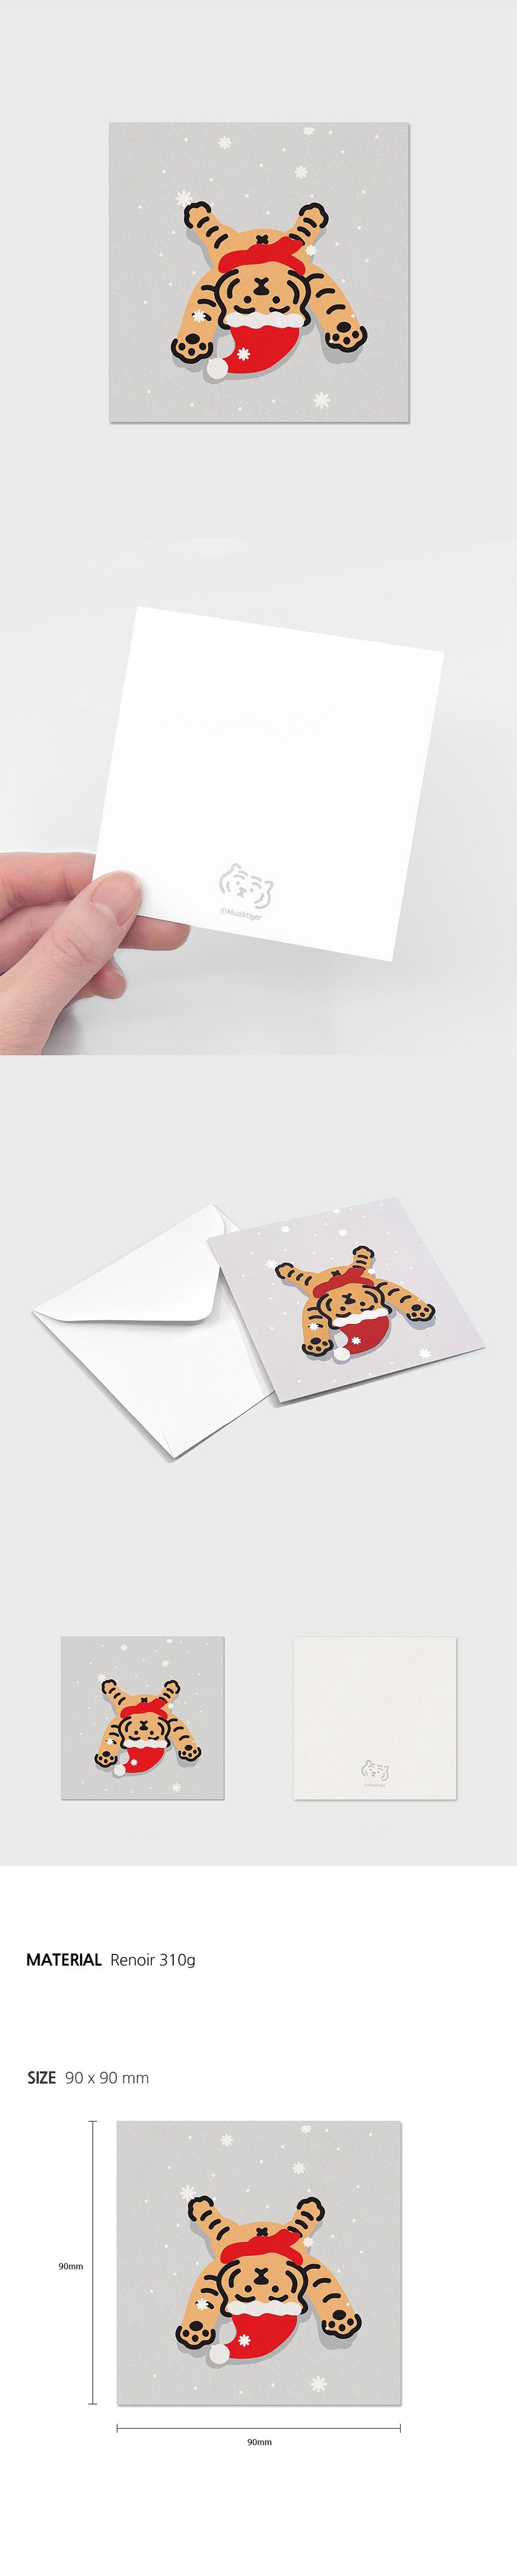 Snow Santa Tiger カード